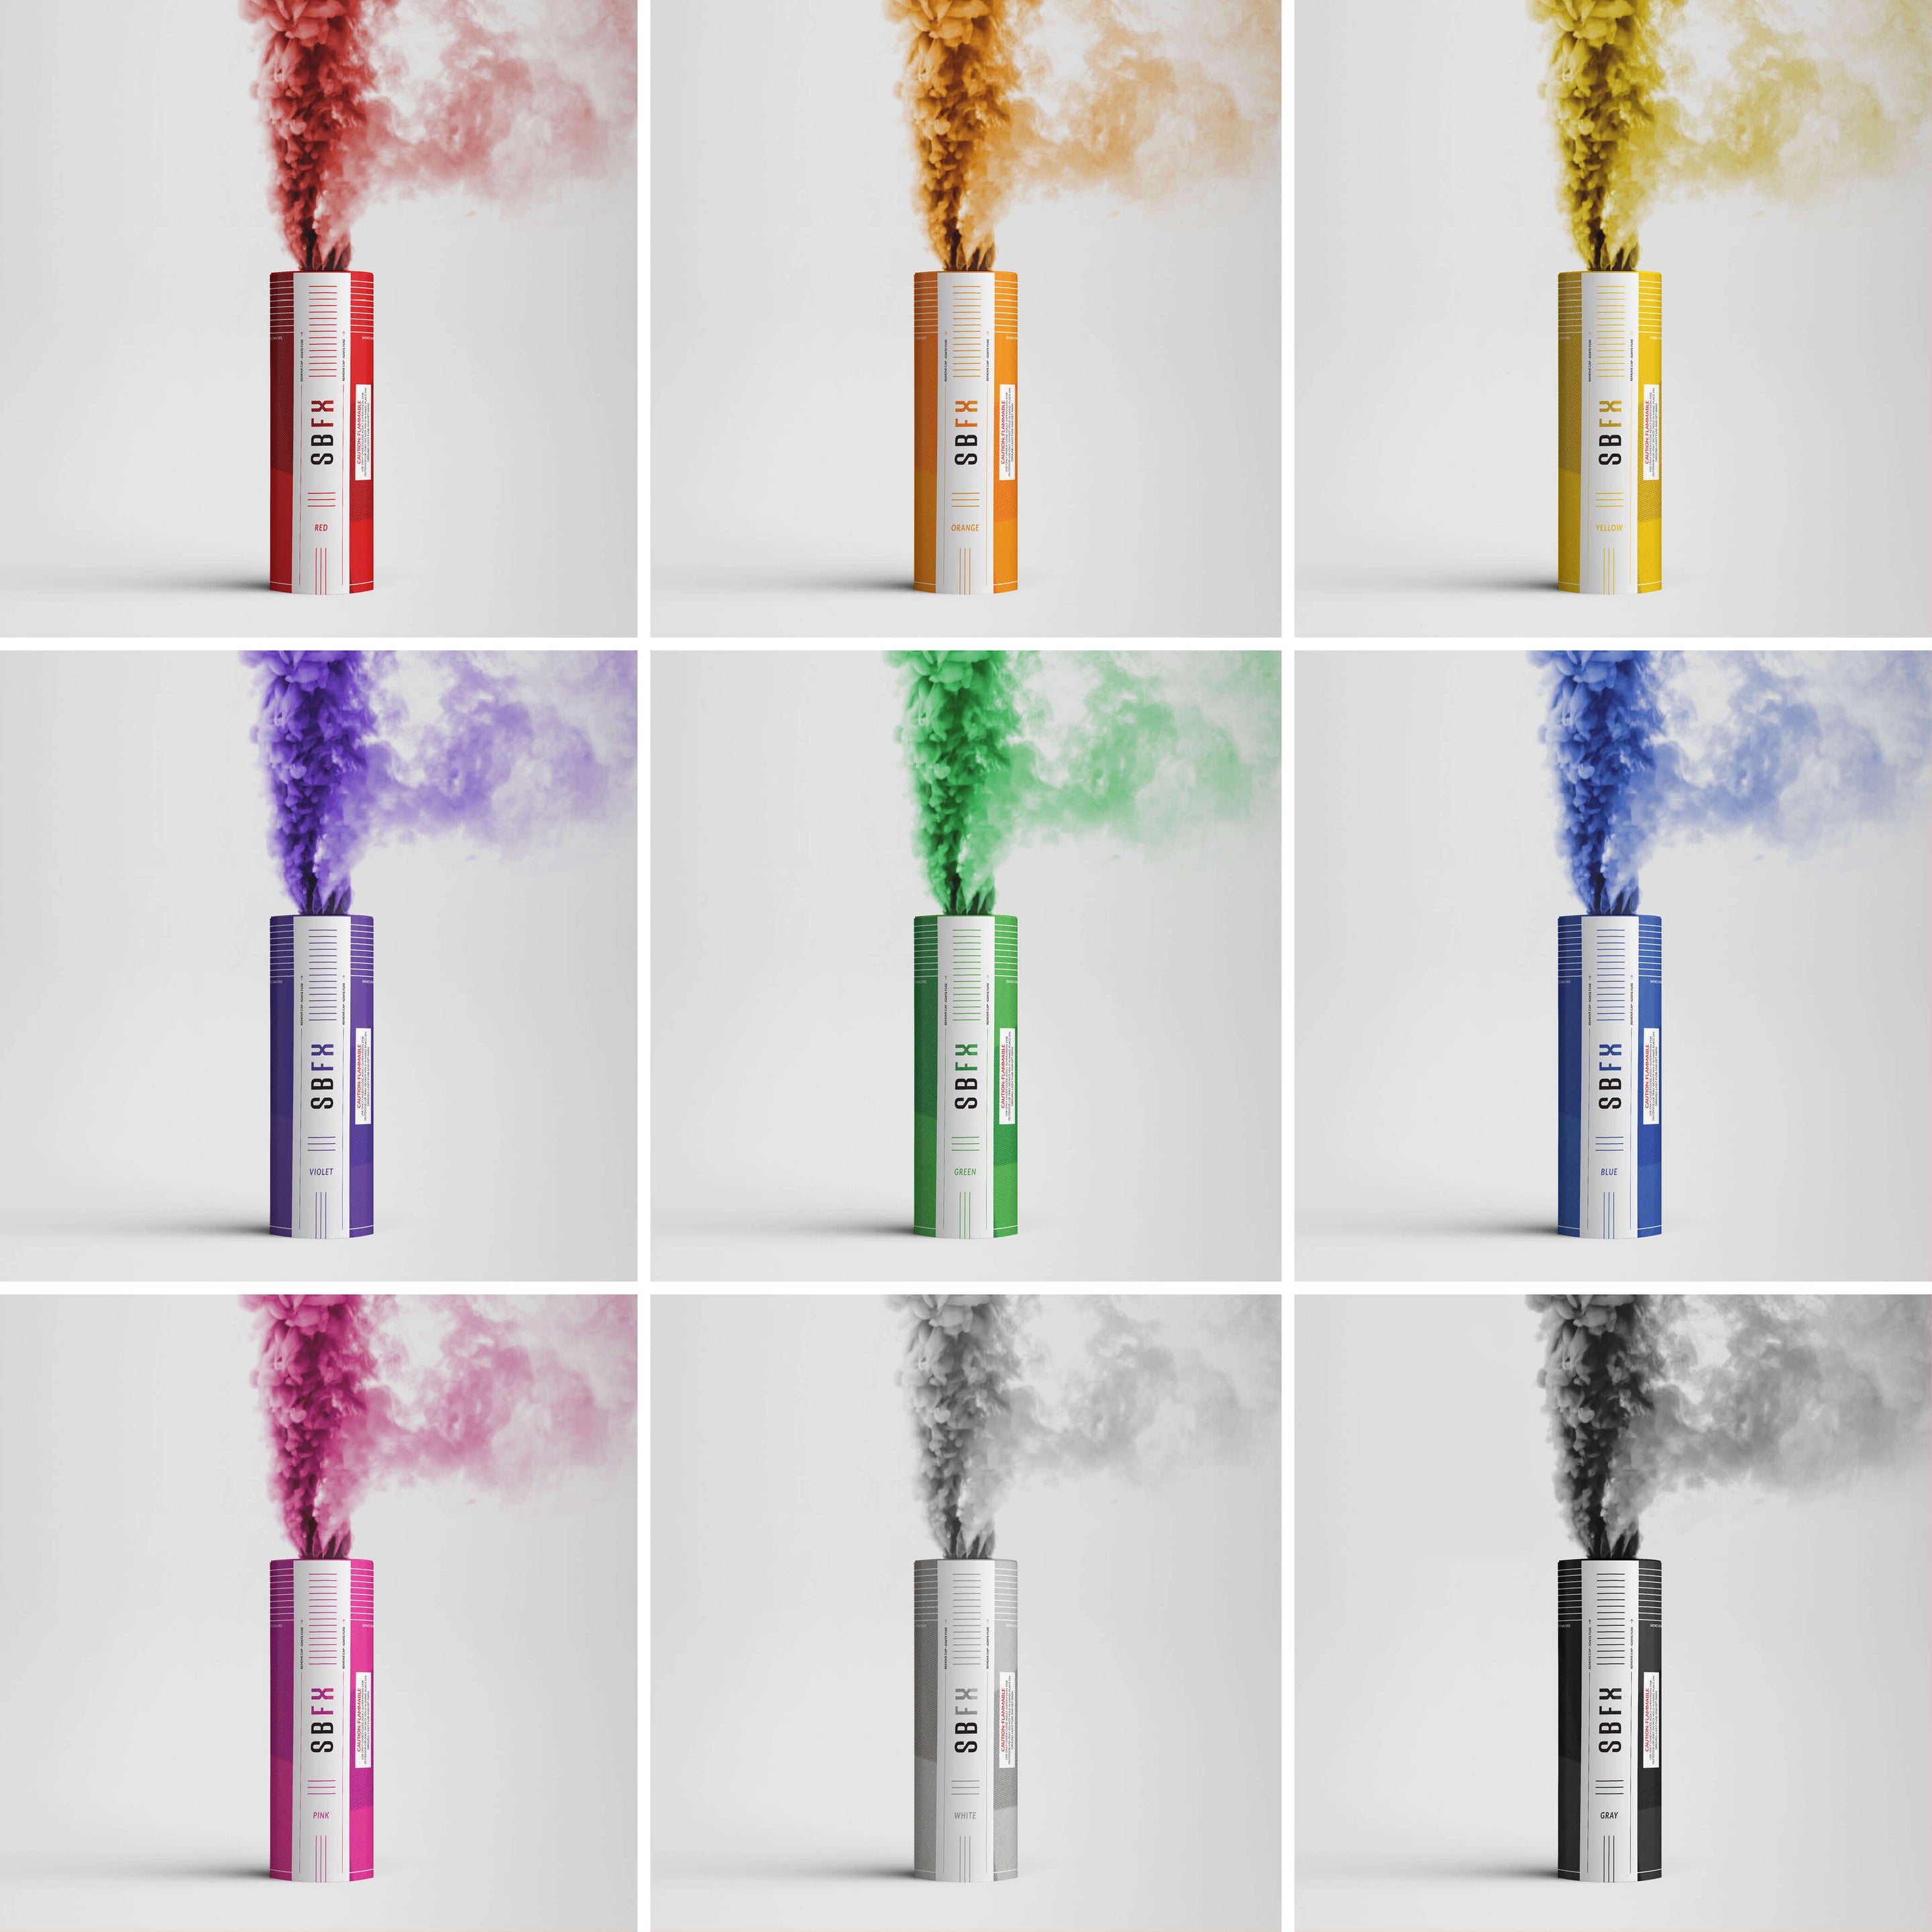 colored smoke grenades